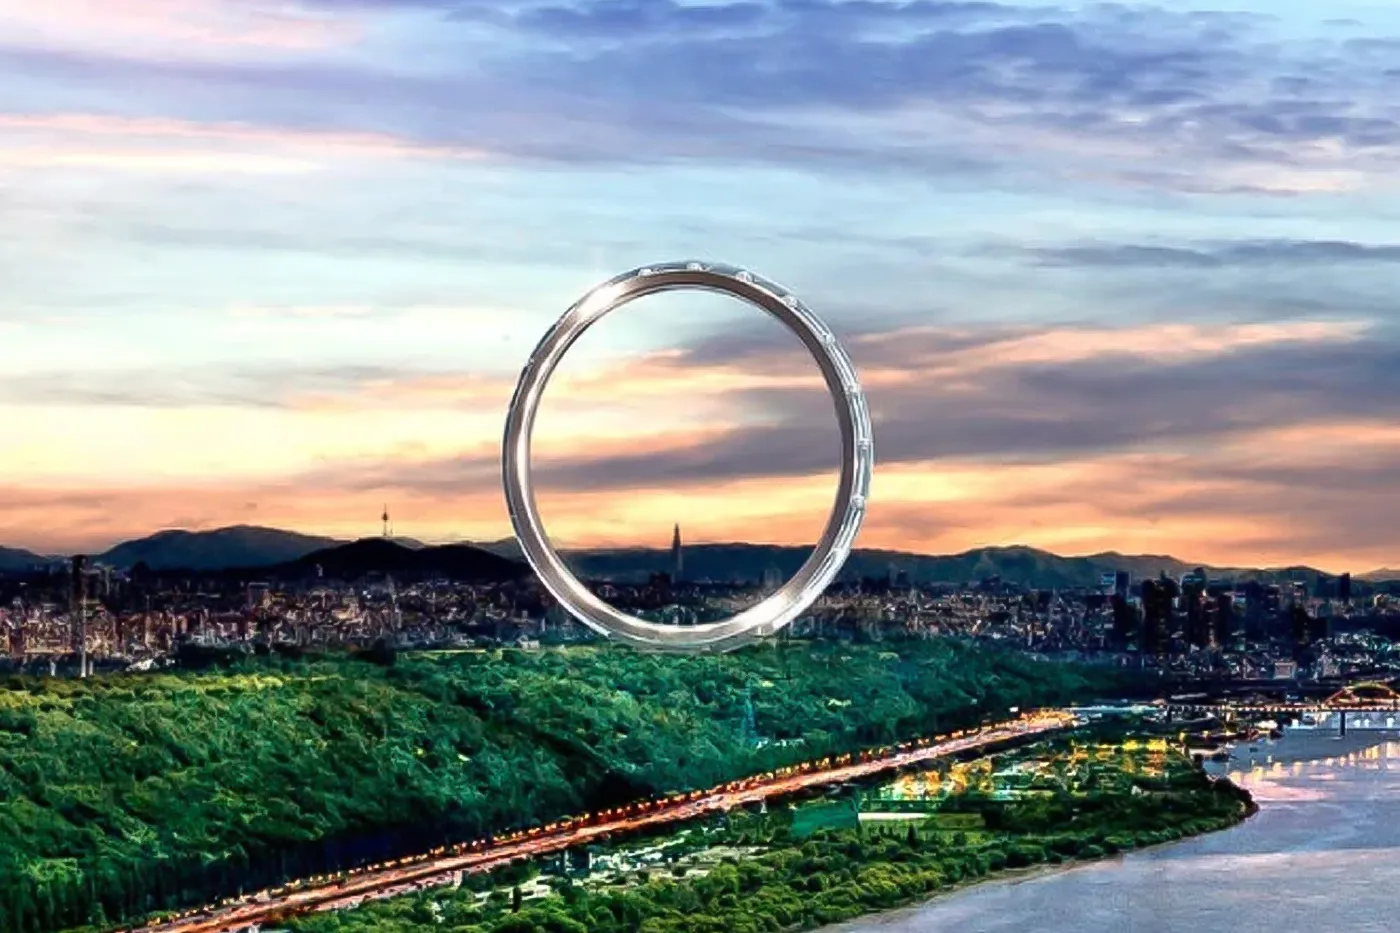 worlds largest spokeless ferris wheel seoul ring south korea news info 002